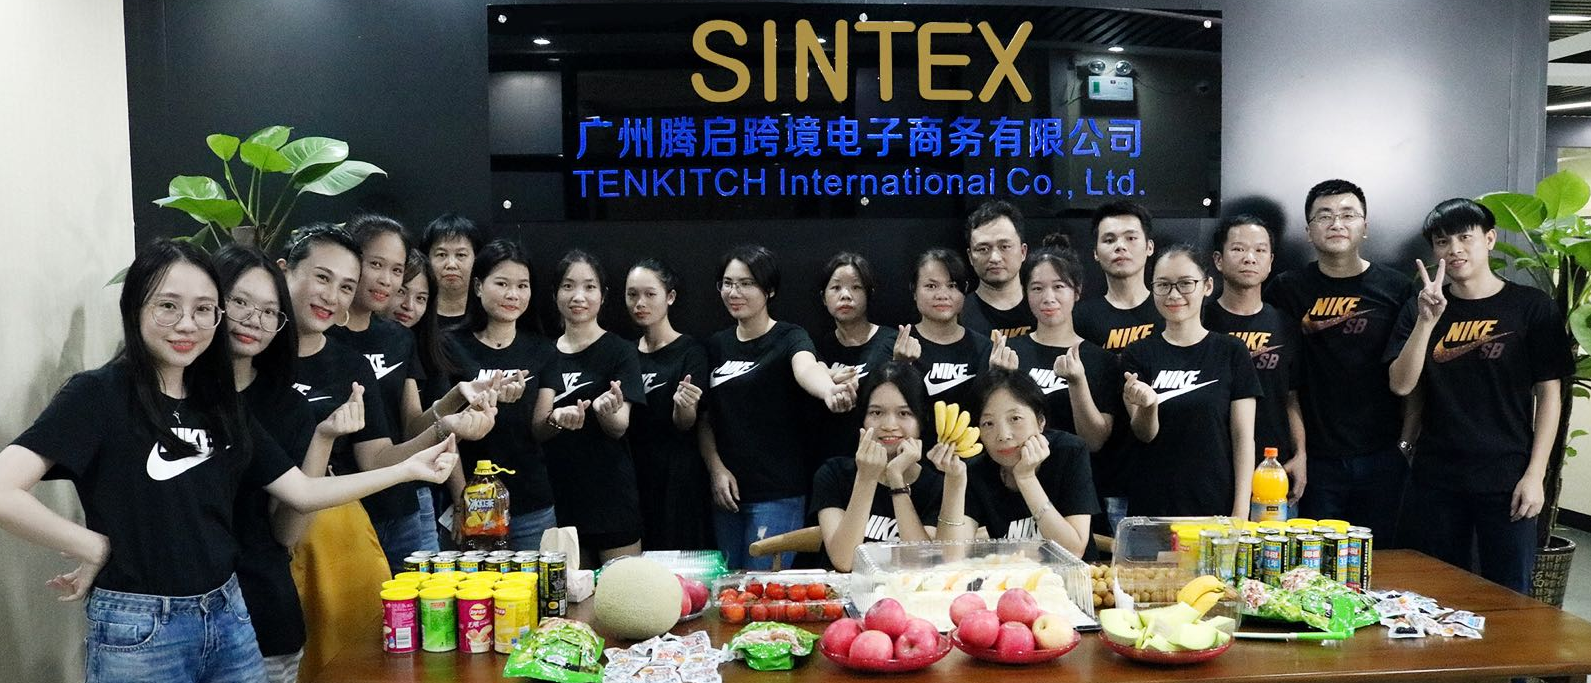 sintex team